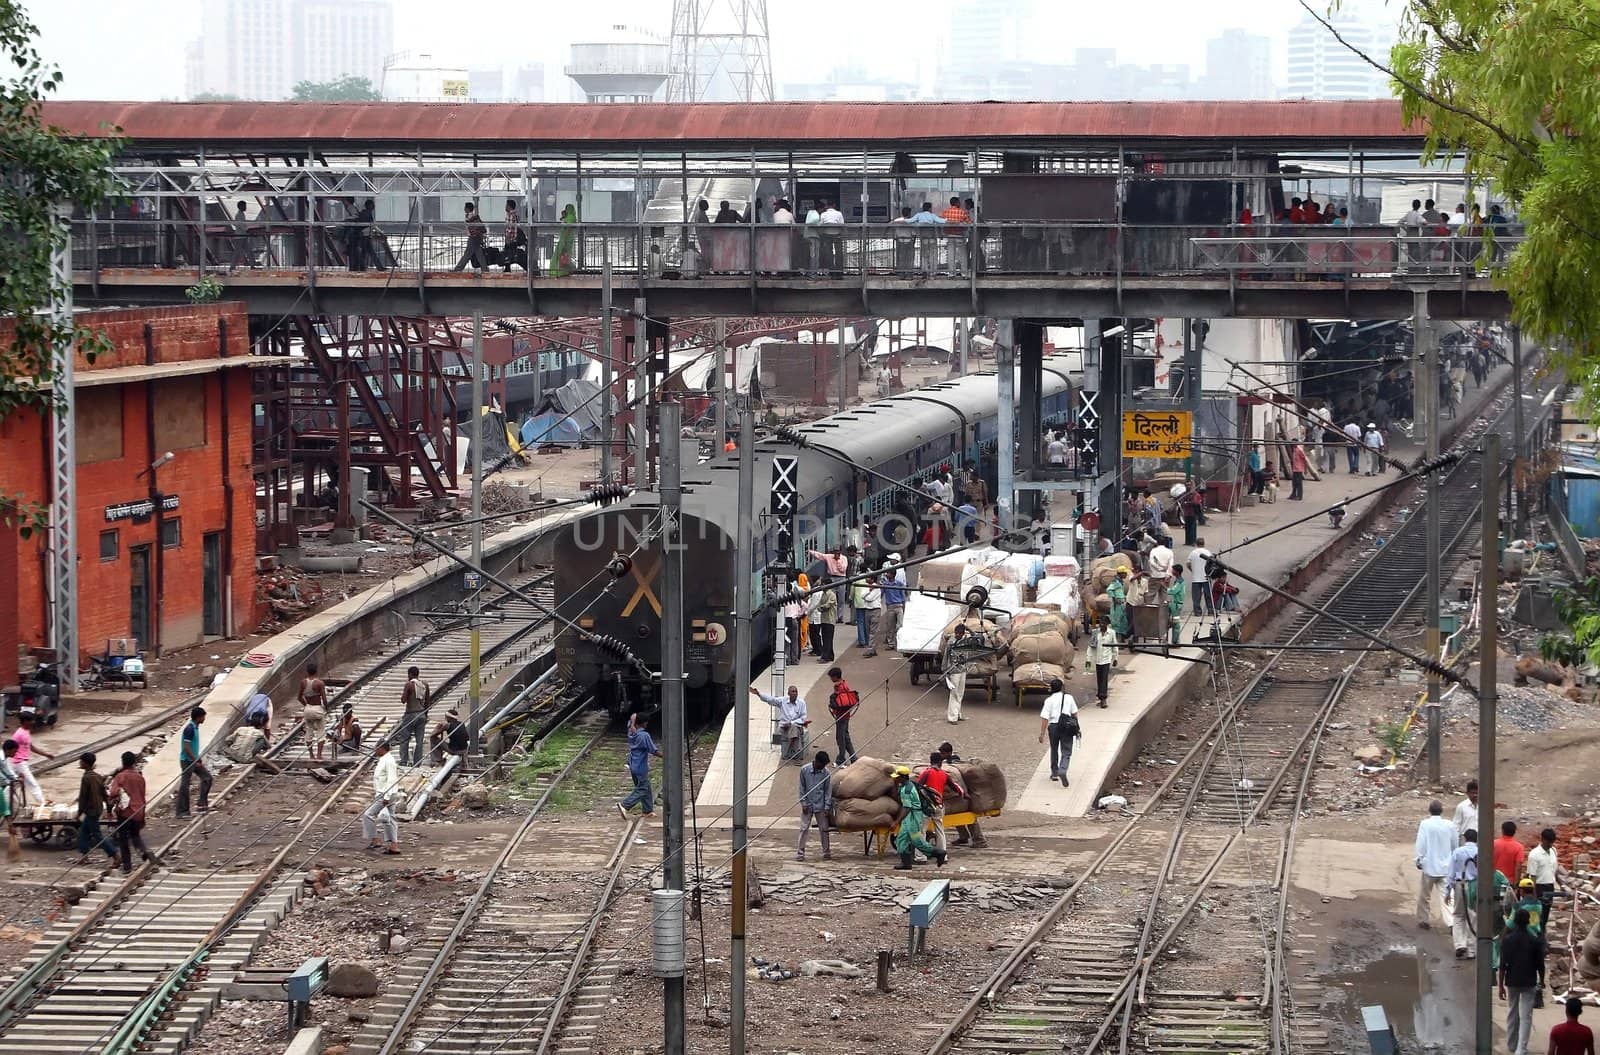 Locomotive at the train station in New Delhi - India